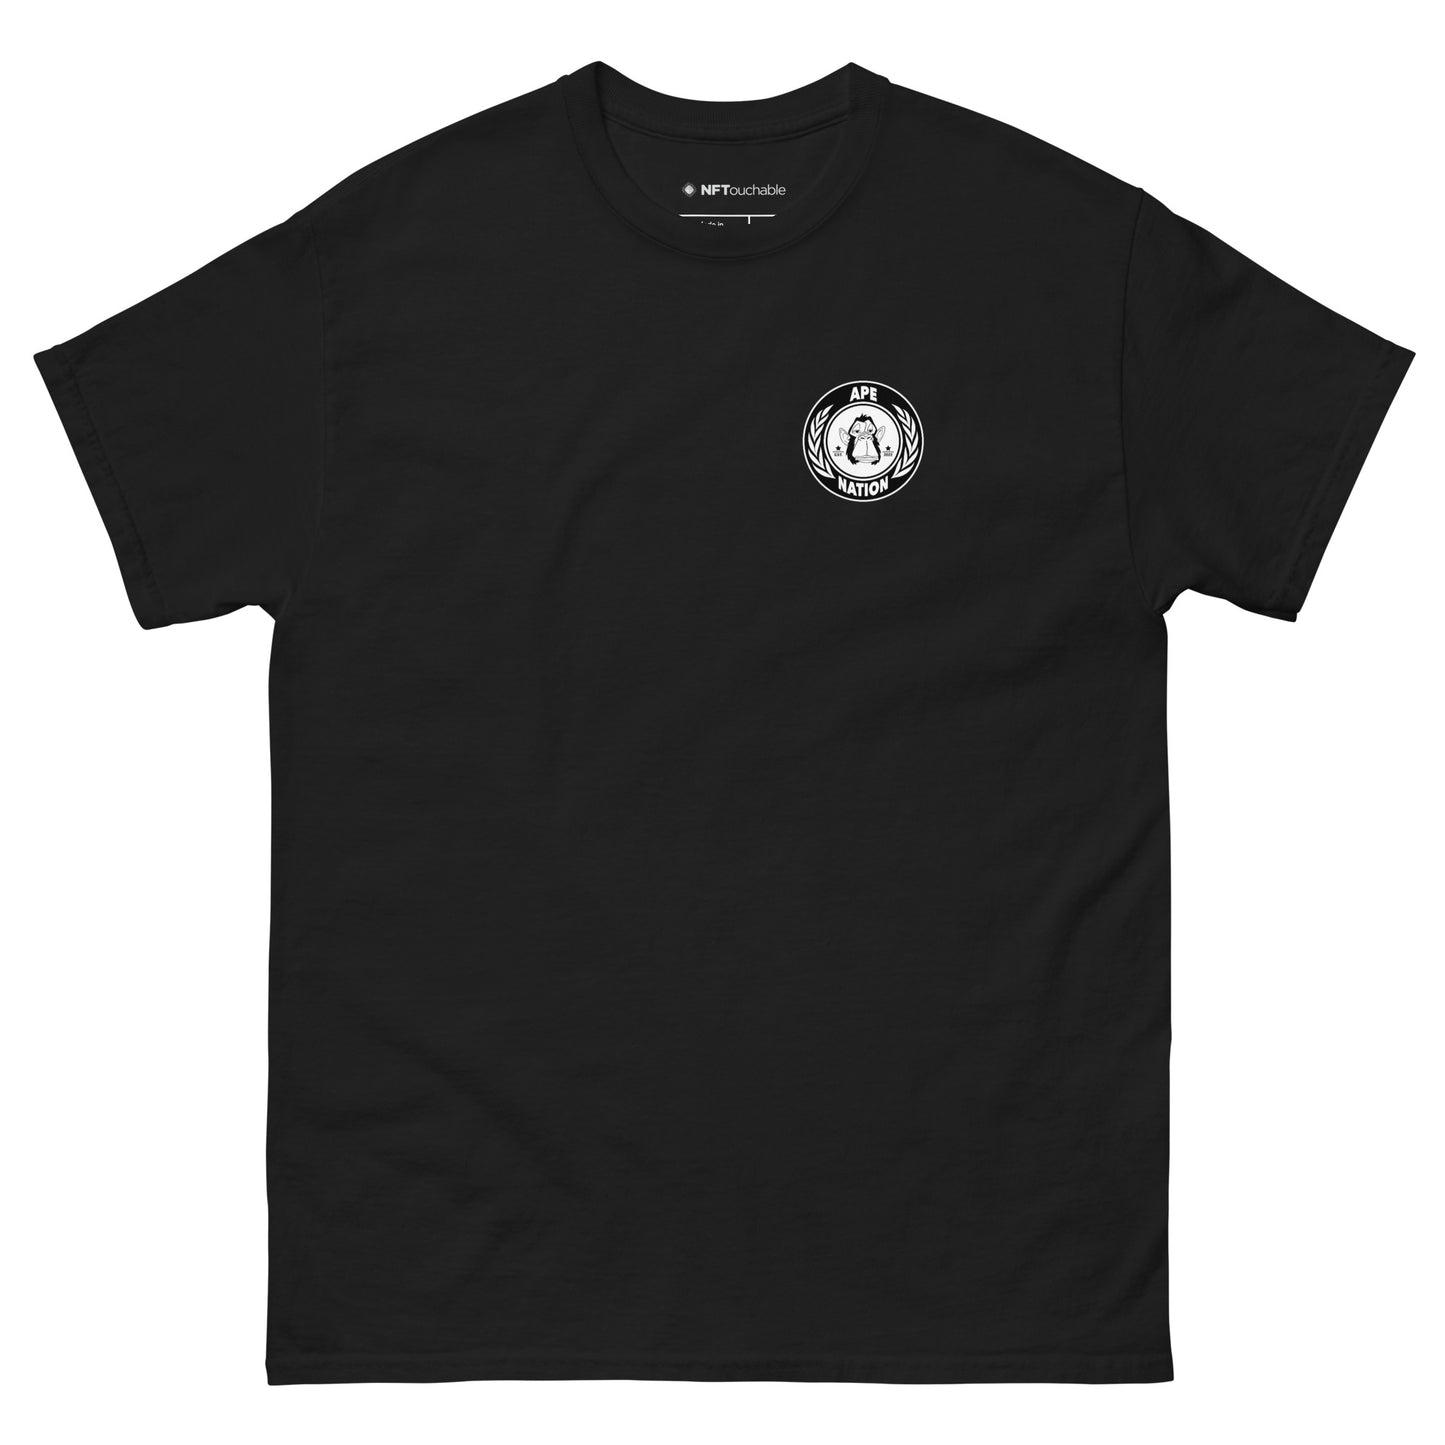 Ape Nation T-Shirt